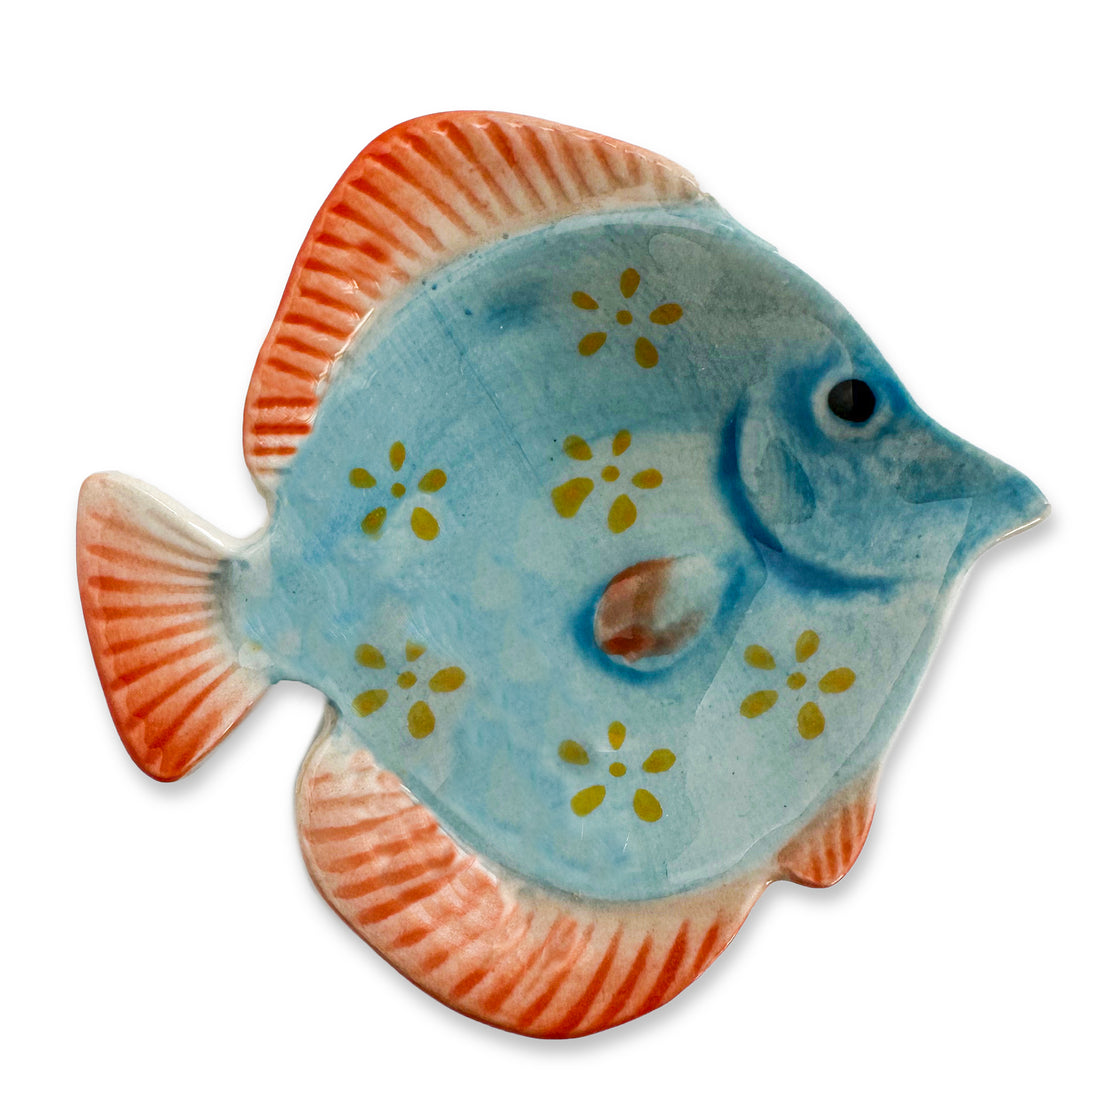 Mini Fish Plates - for Soy Sauce, Wasabi, or Any Small Garnish - Set of 6 Decorative Tiny Plates